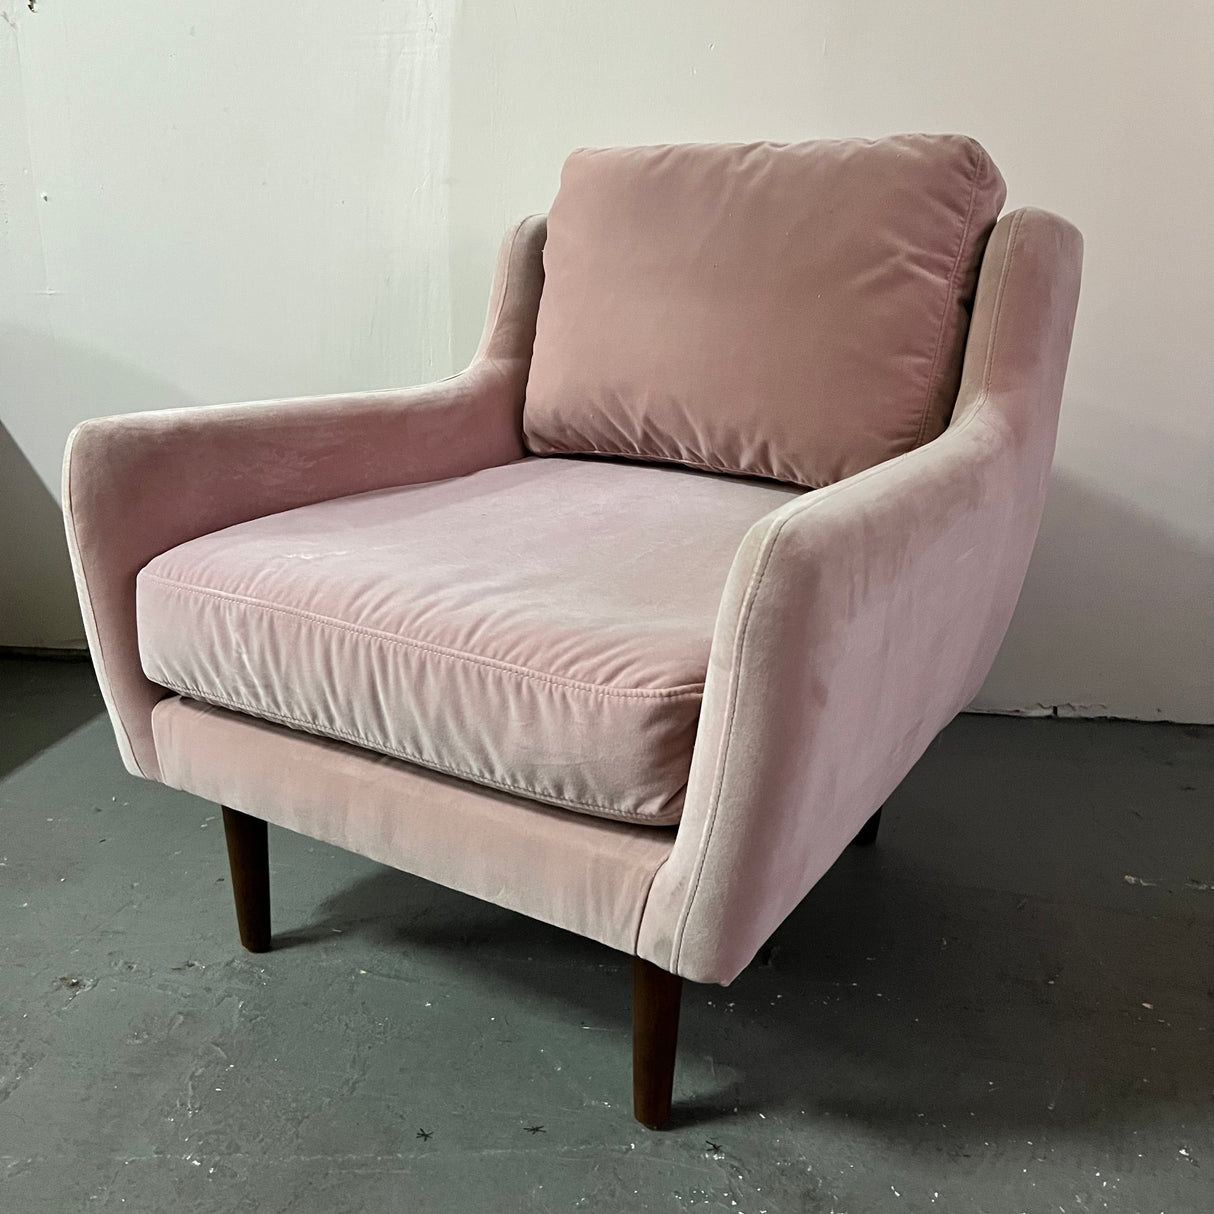 Article Matrix Modern Velvet Blush Pink lounge chair (Retail $650+)